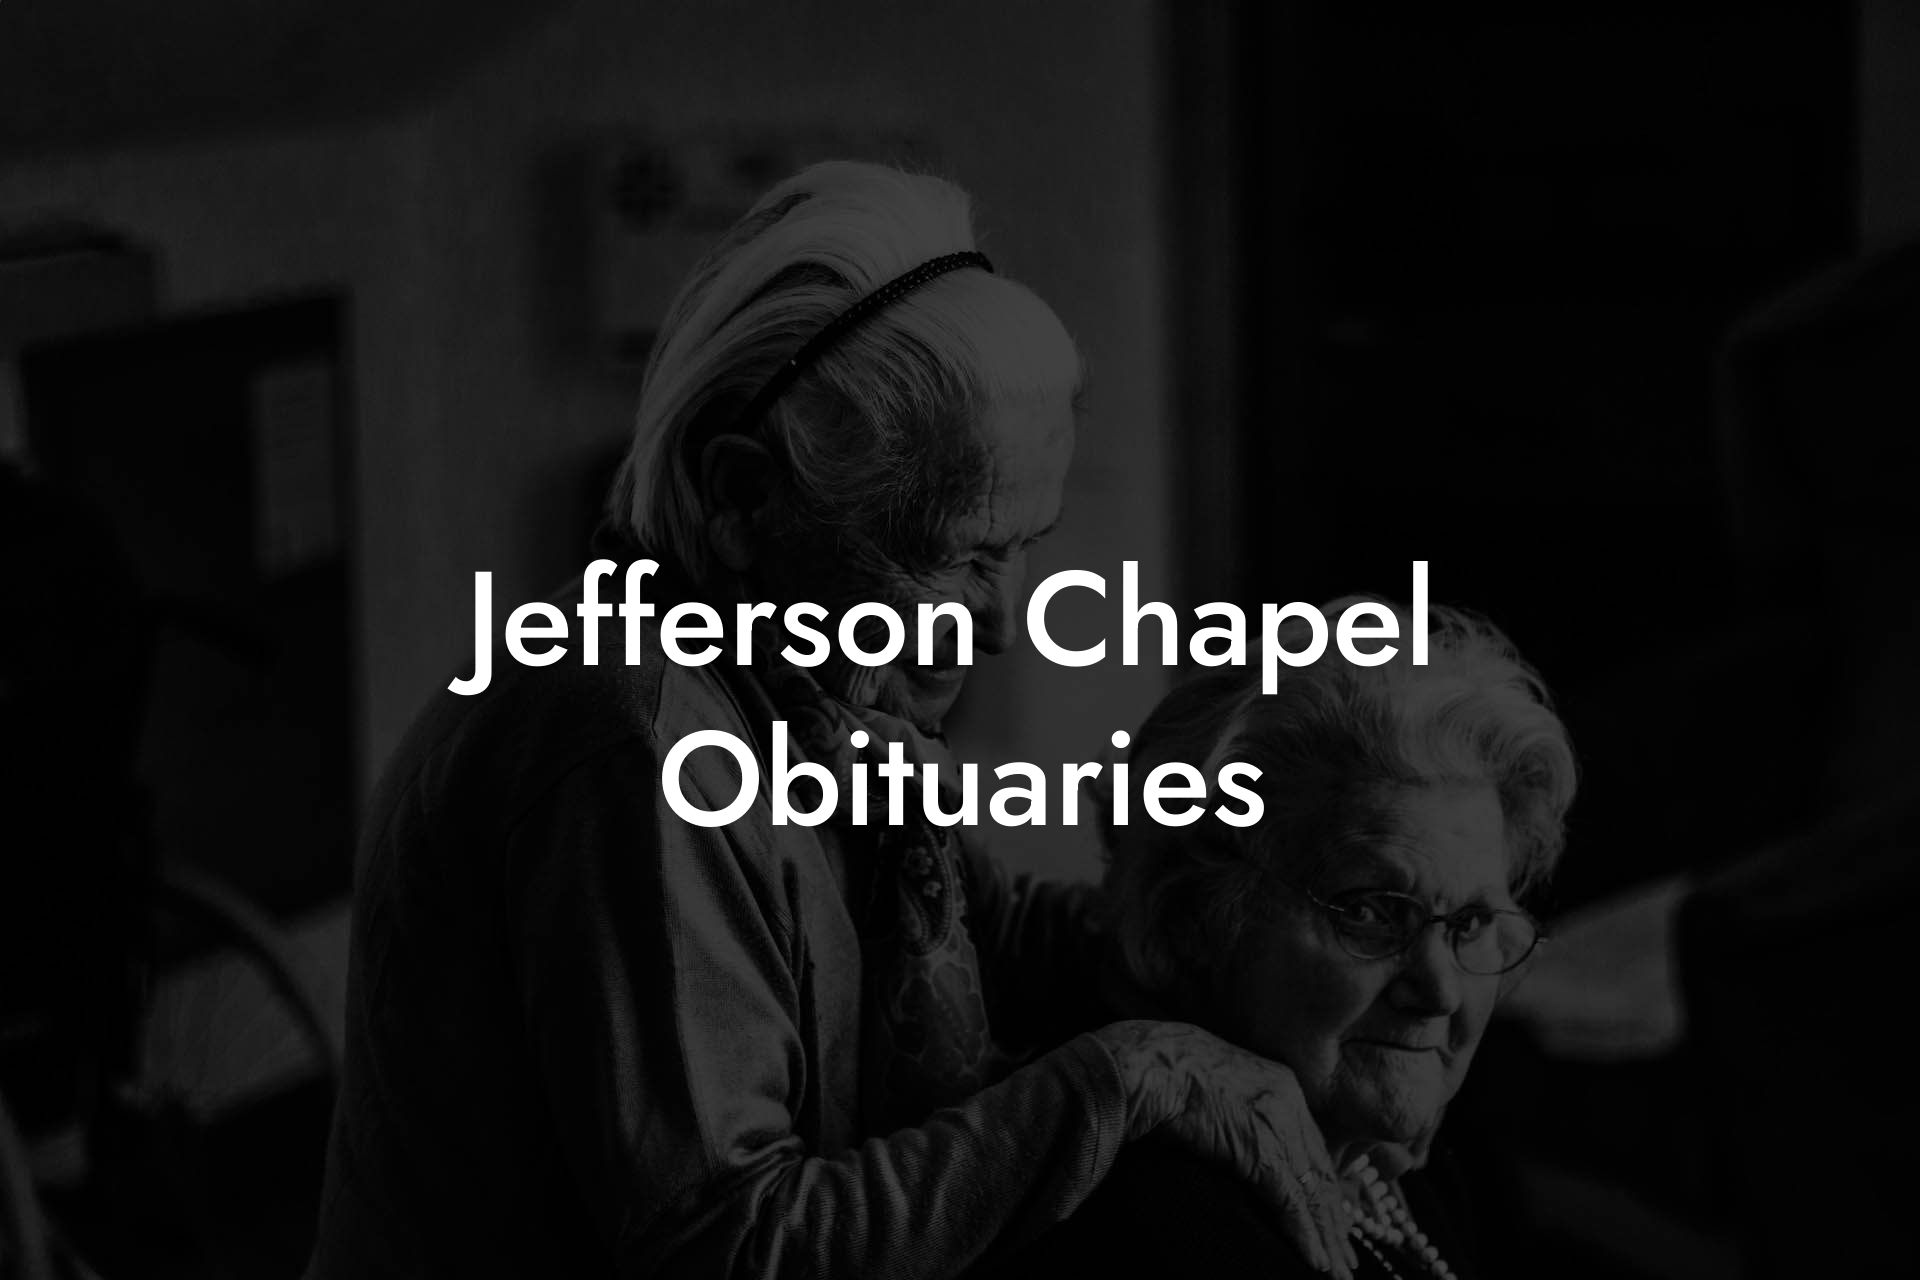 Jefferson Chapel Obituaries